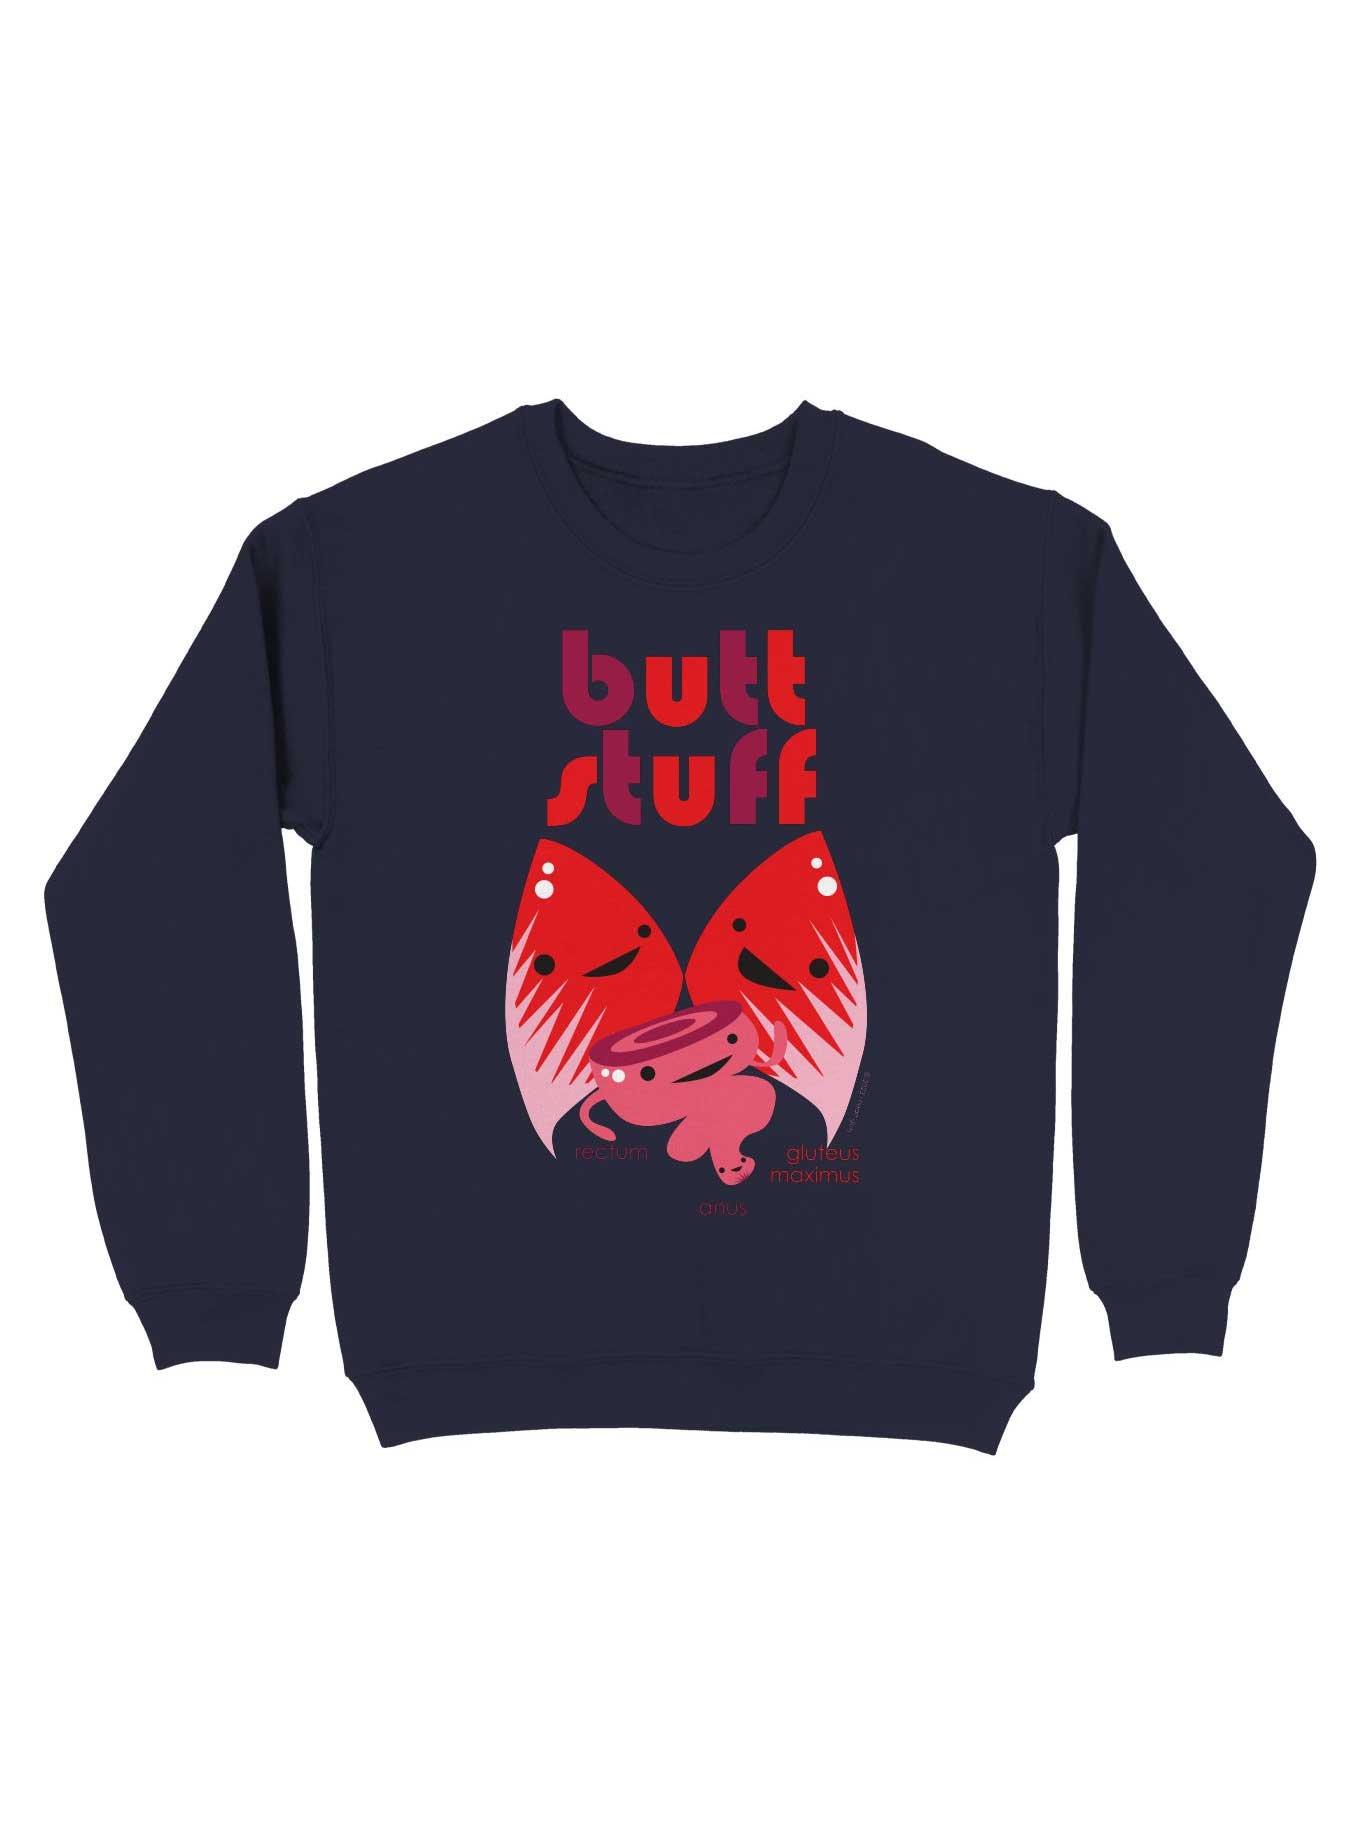 Butt Stuff - Cute Colorectal Pals for Colorectal Health & Humor Sweatshirt, , hi-res